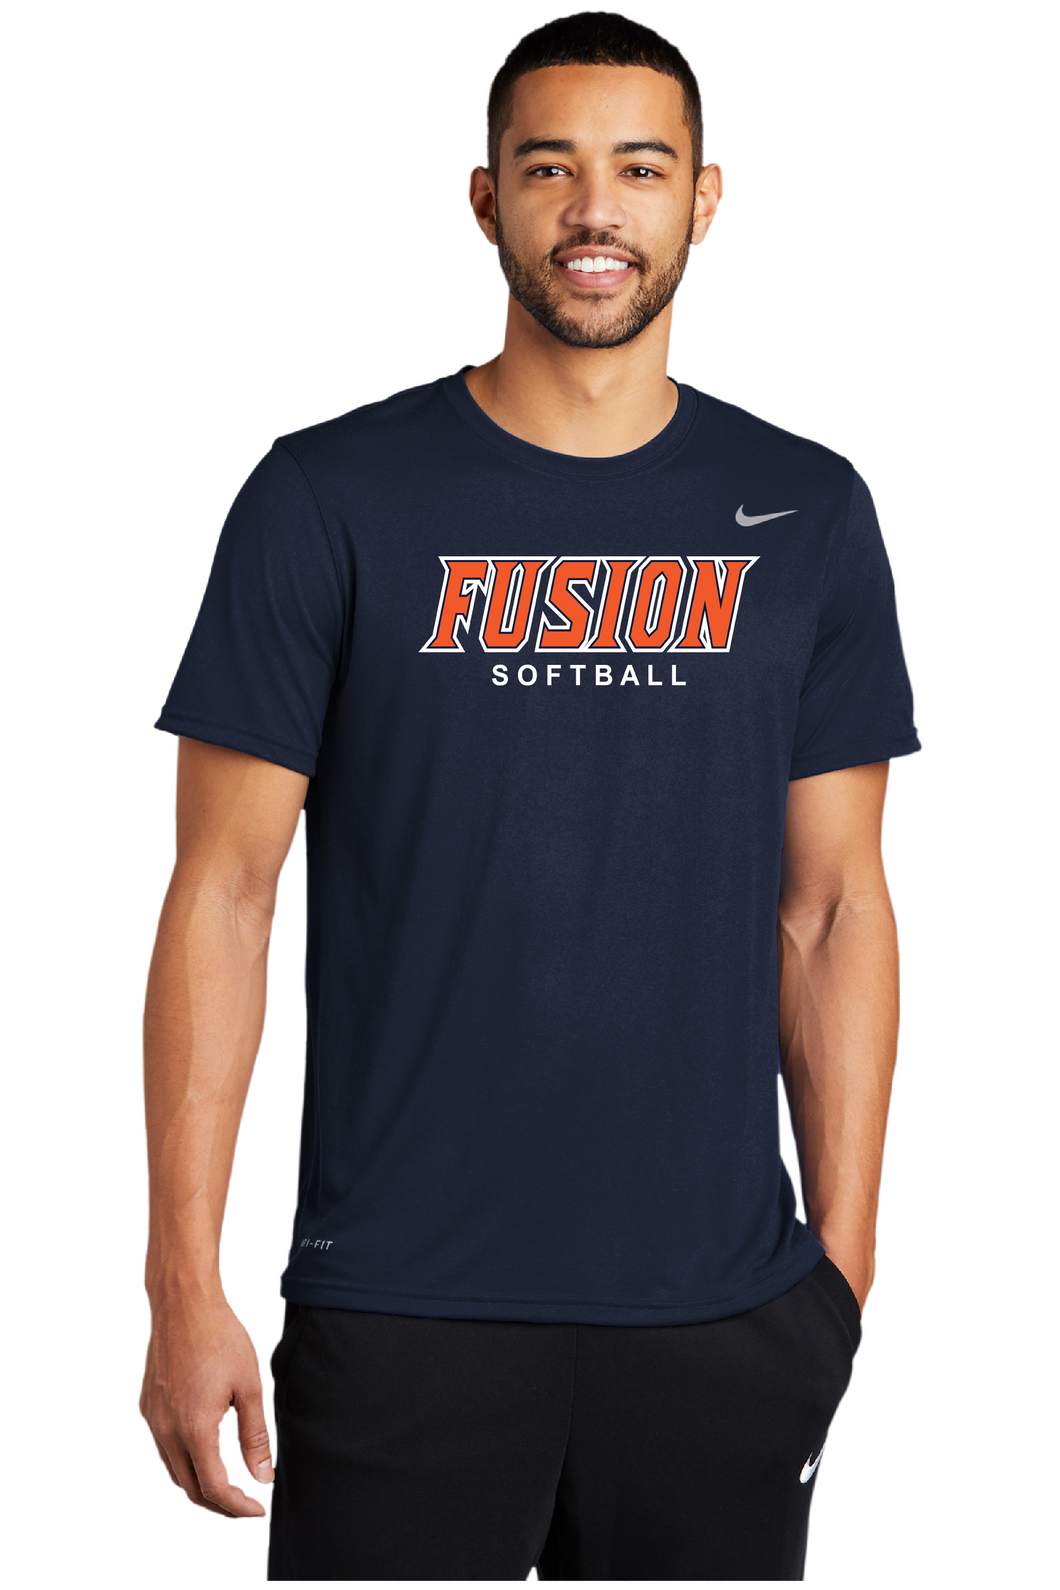 Fusion Softball Nike Tee